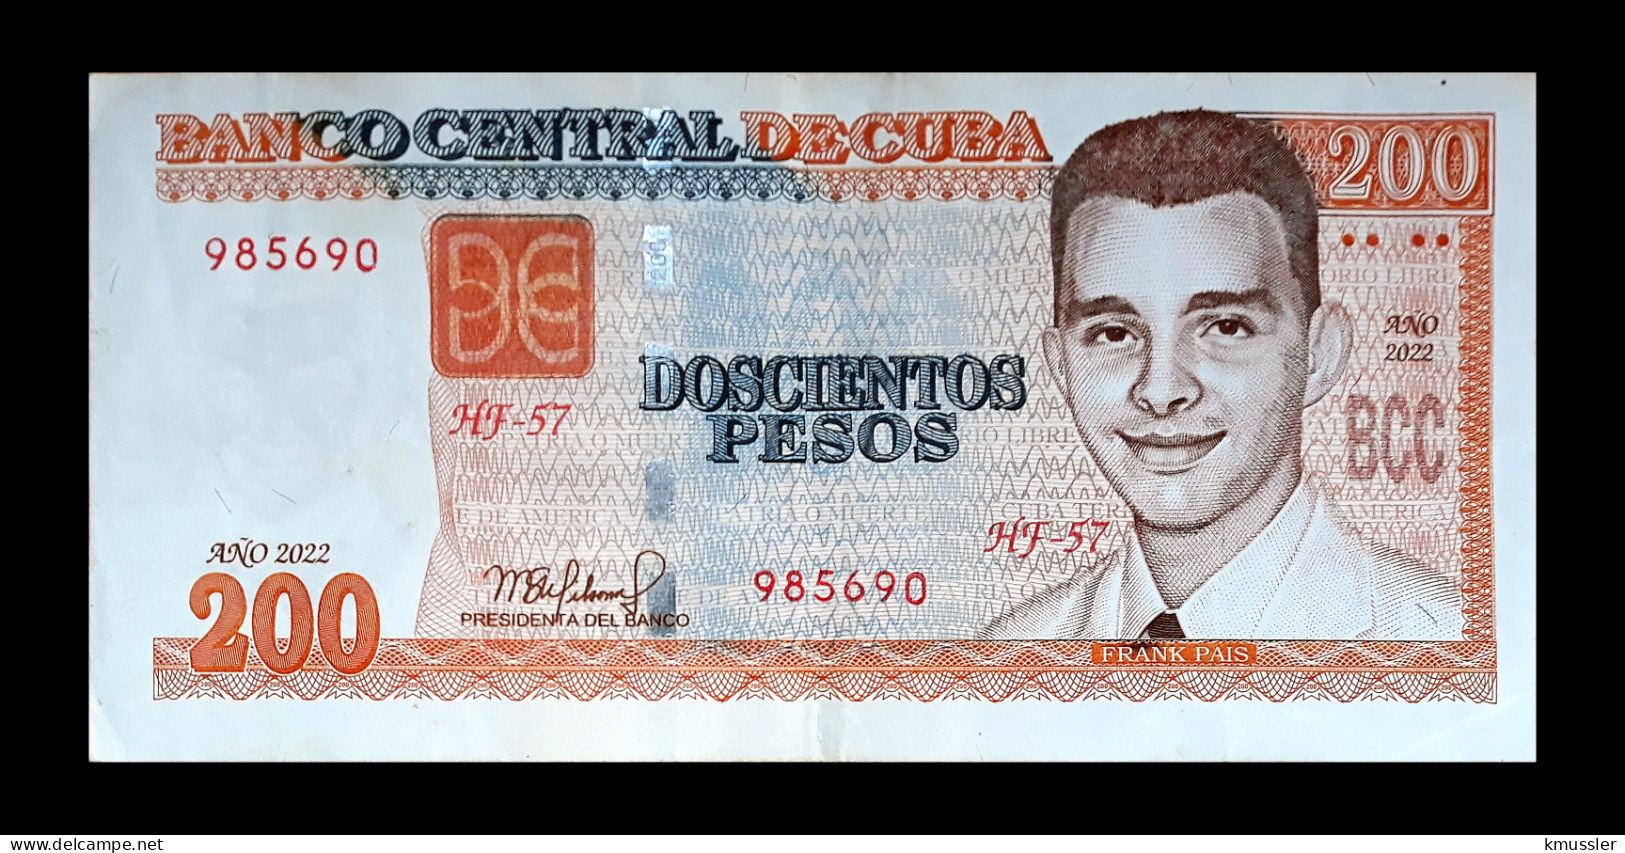 # # # Banknote Kuba (Cuba) 200 Pesos 2020 # # # - Kuba